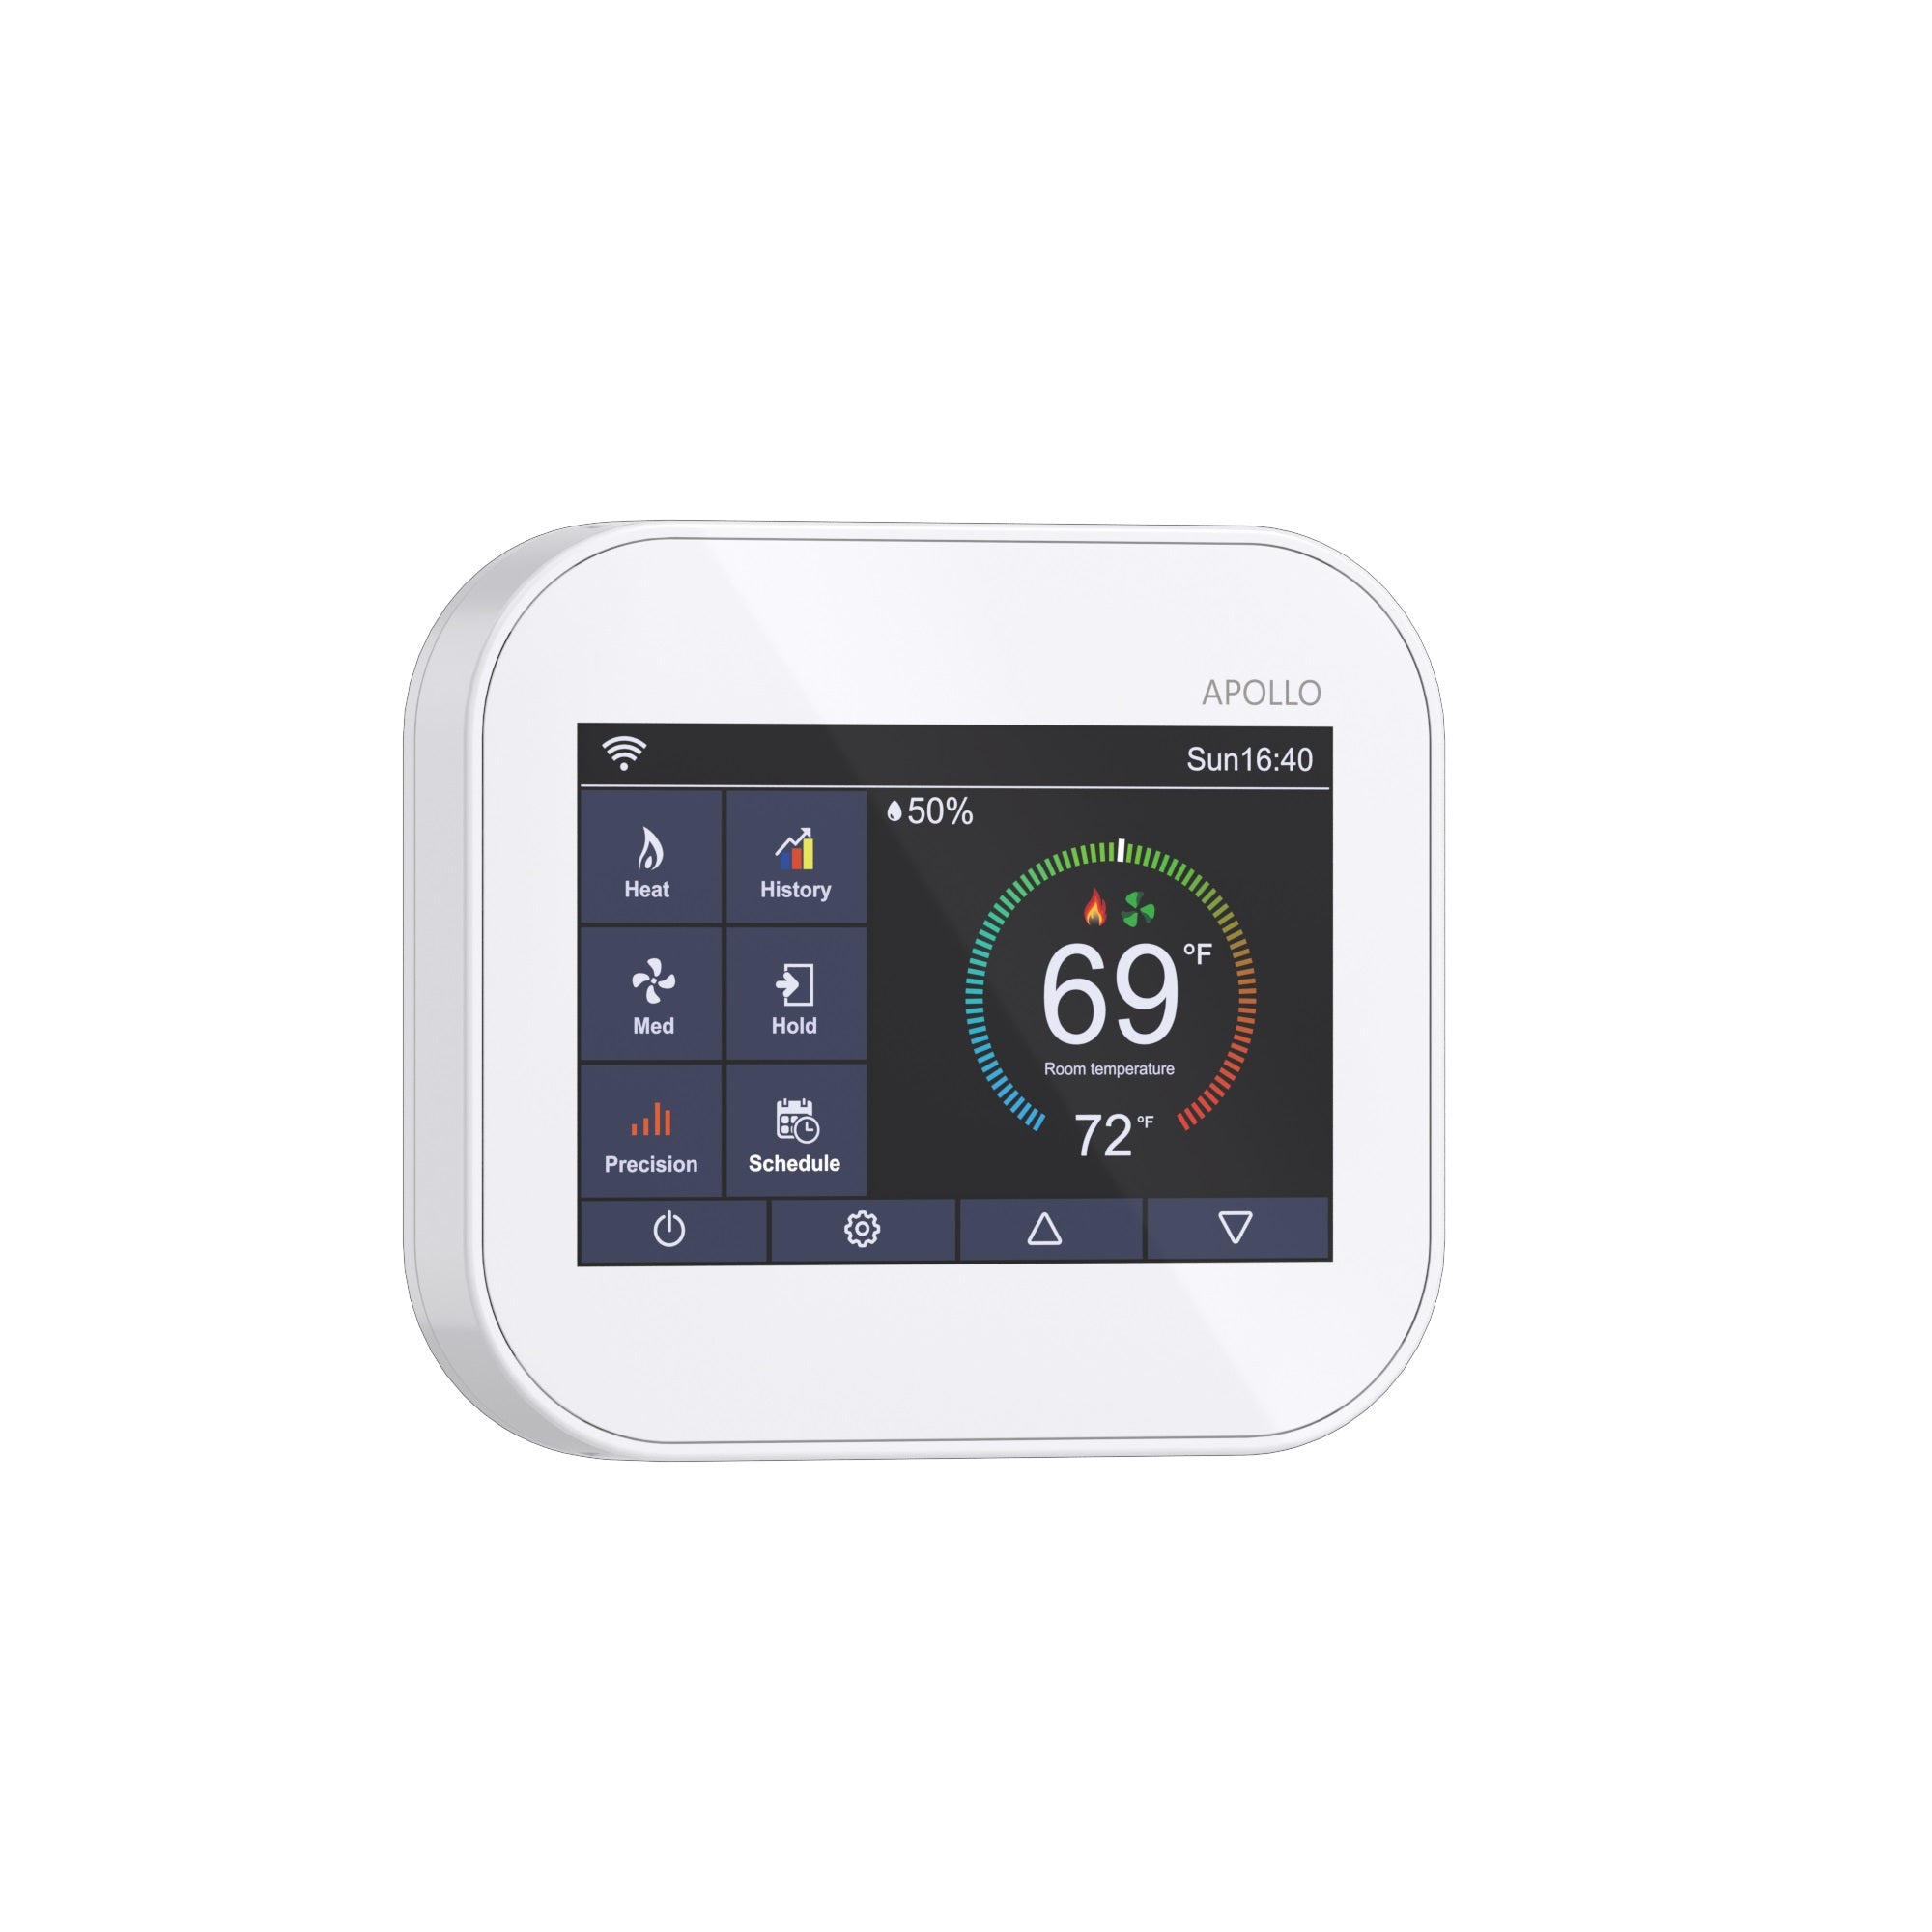 Wi-Fi Thermostat Programmable Termostato Wifi Caldera Gas Water Boiler Six  Period Voice APP Control LCD